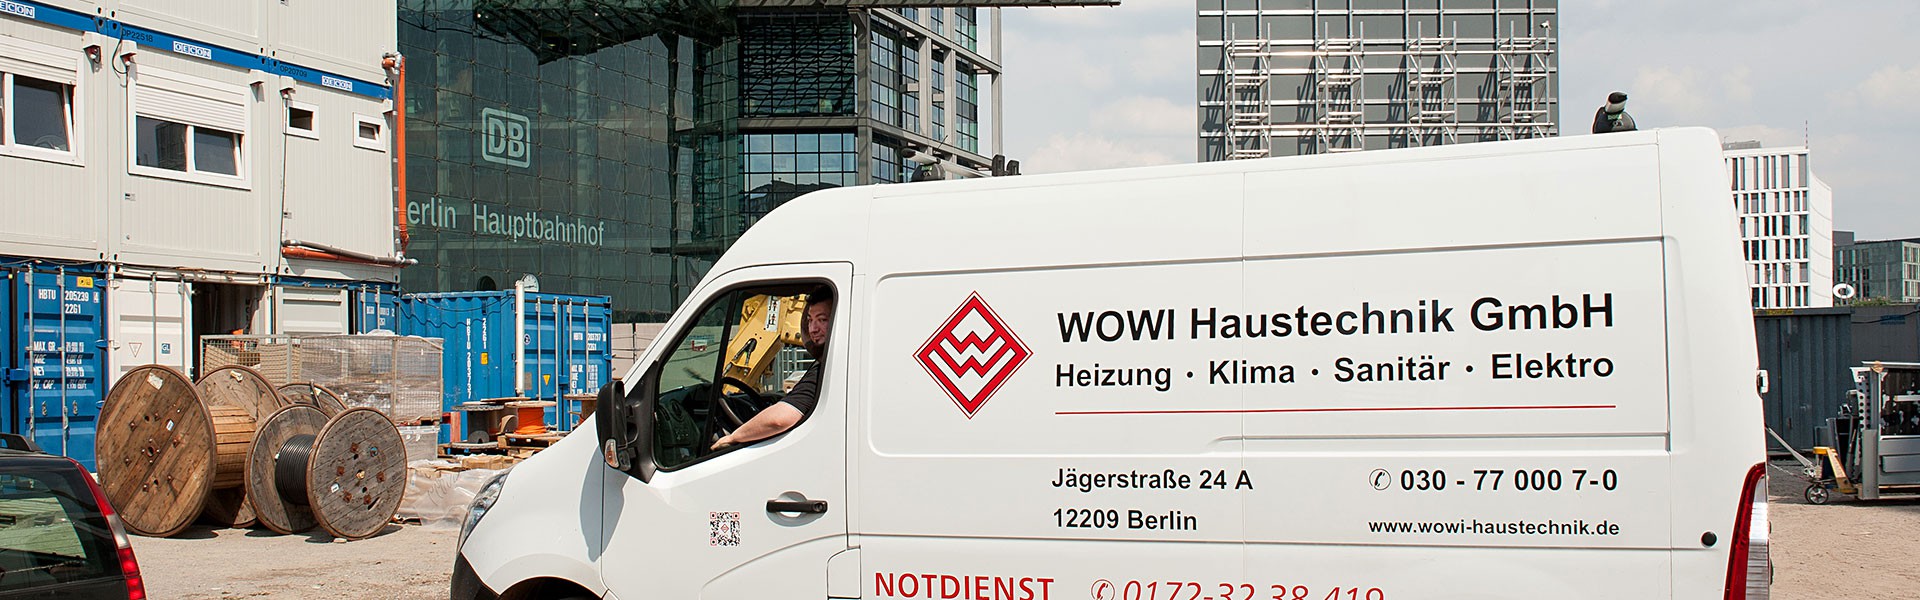 WOWI Haustechnik GmbH Berlin, Anlagenbau